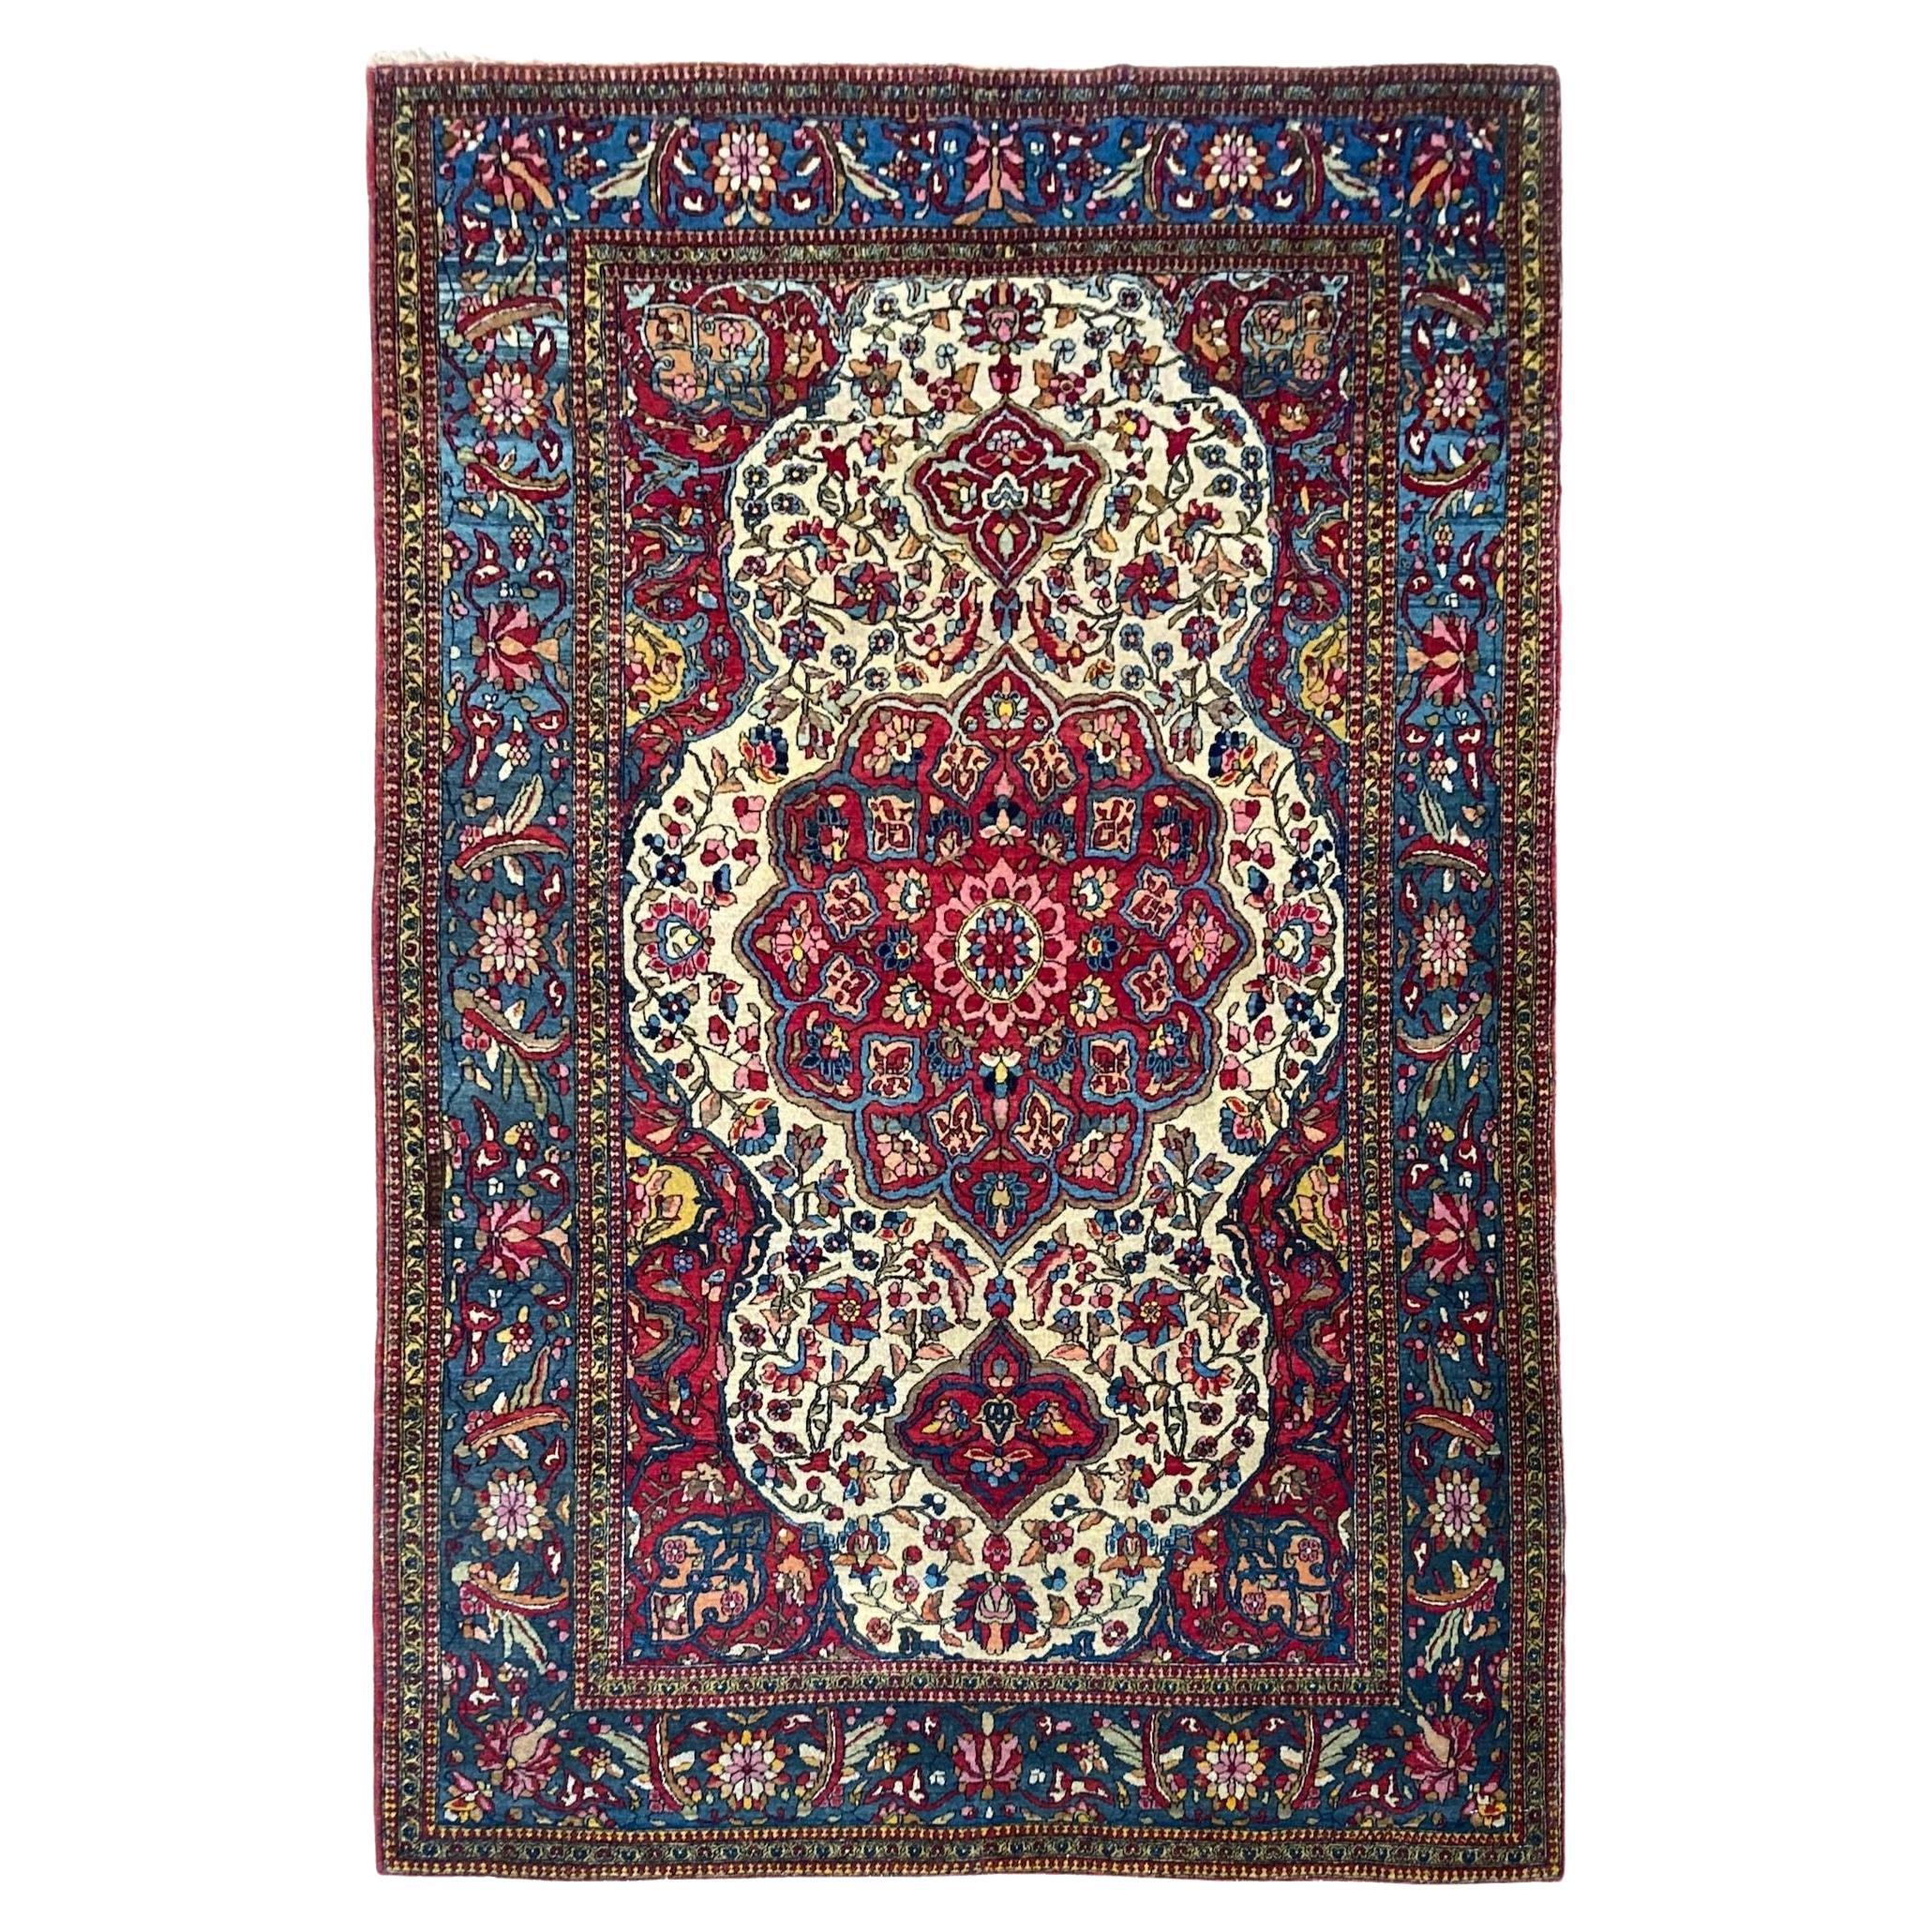 Antiker Isfahan-Teppich